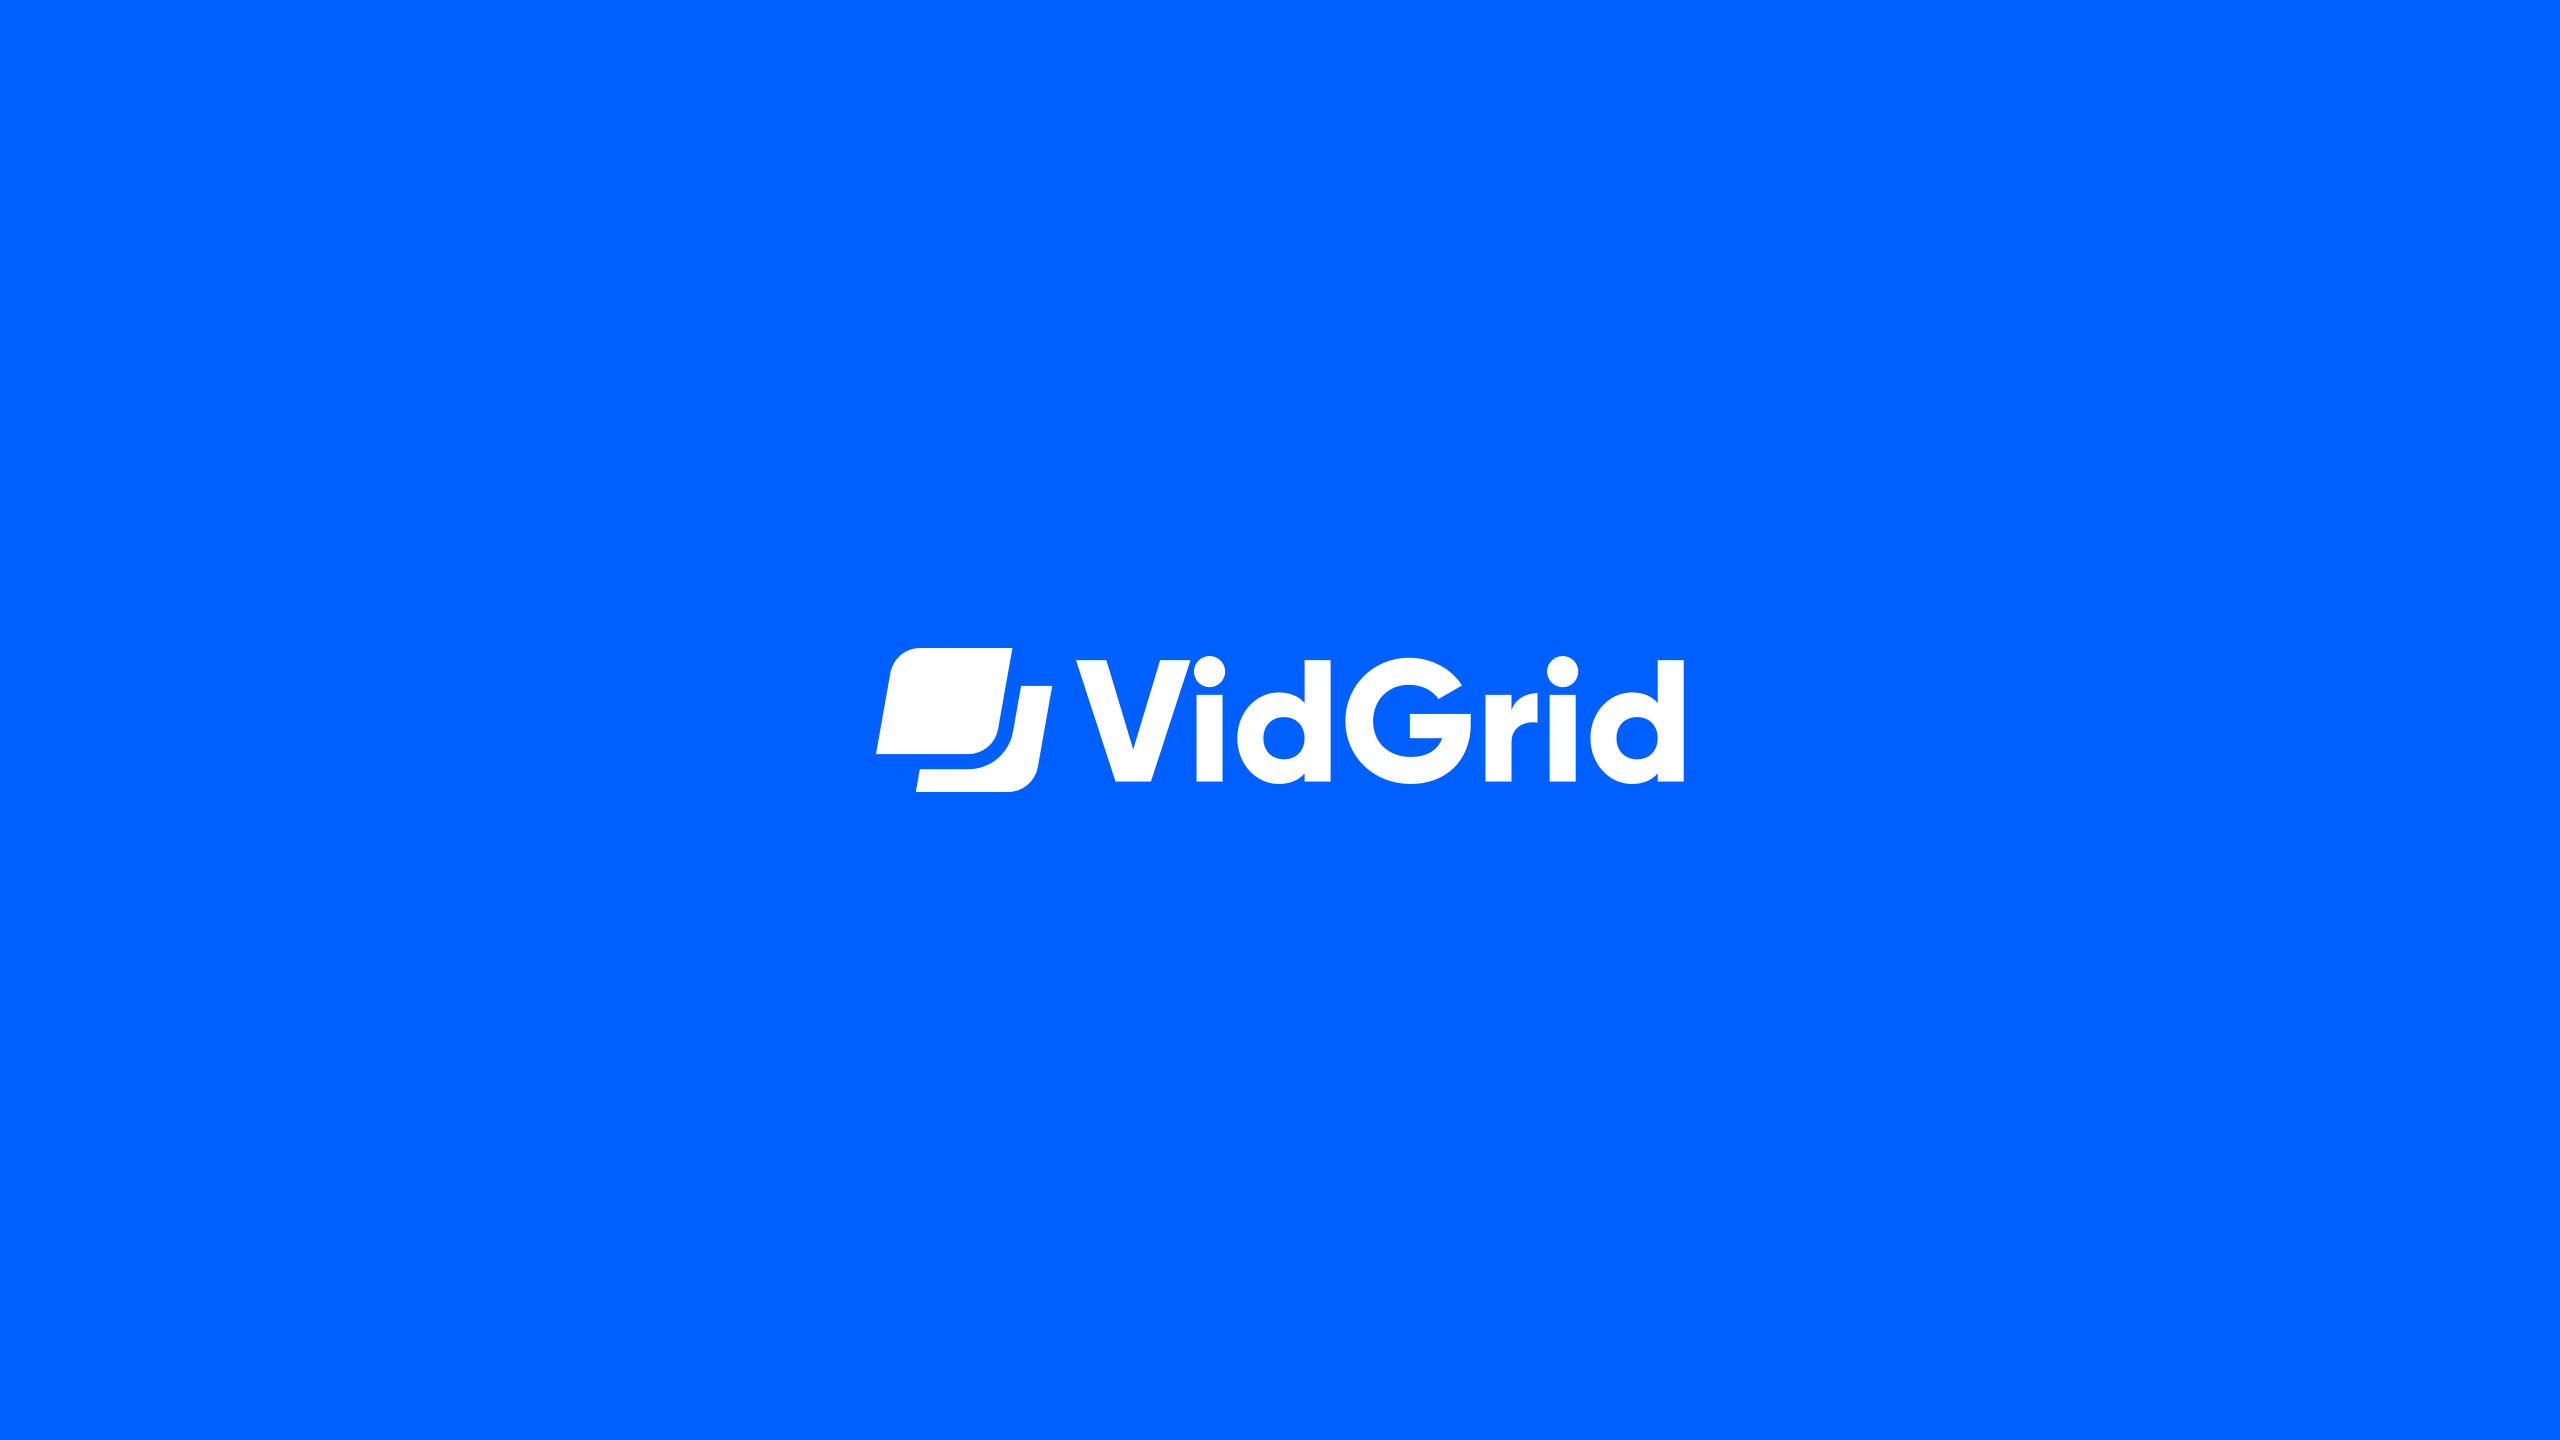 Introducing VidGrid: Video’s Most Interactive Platform